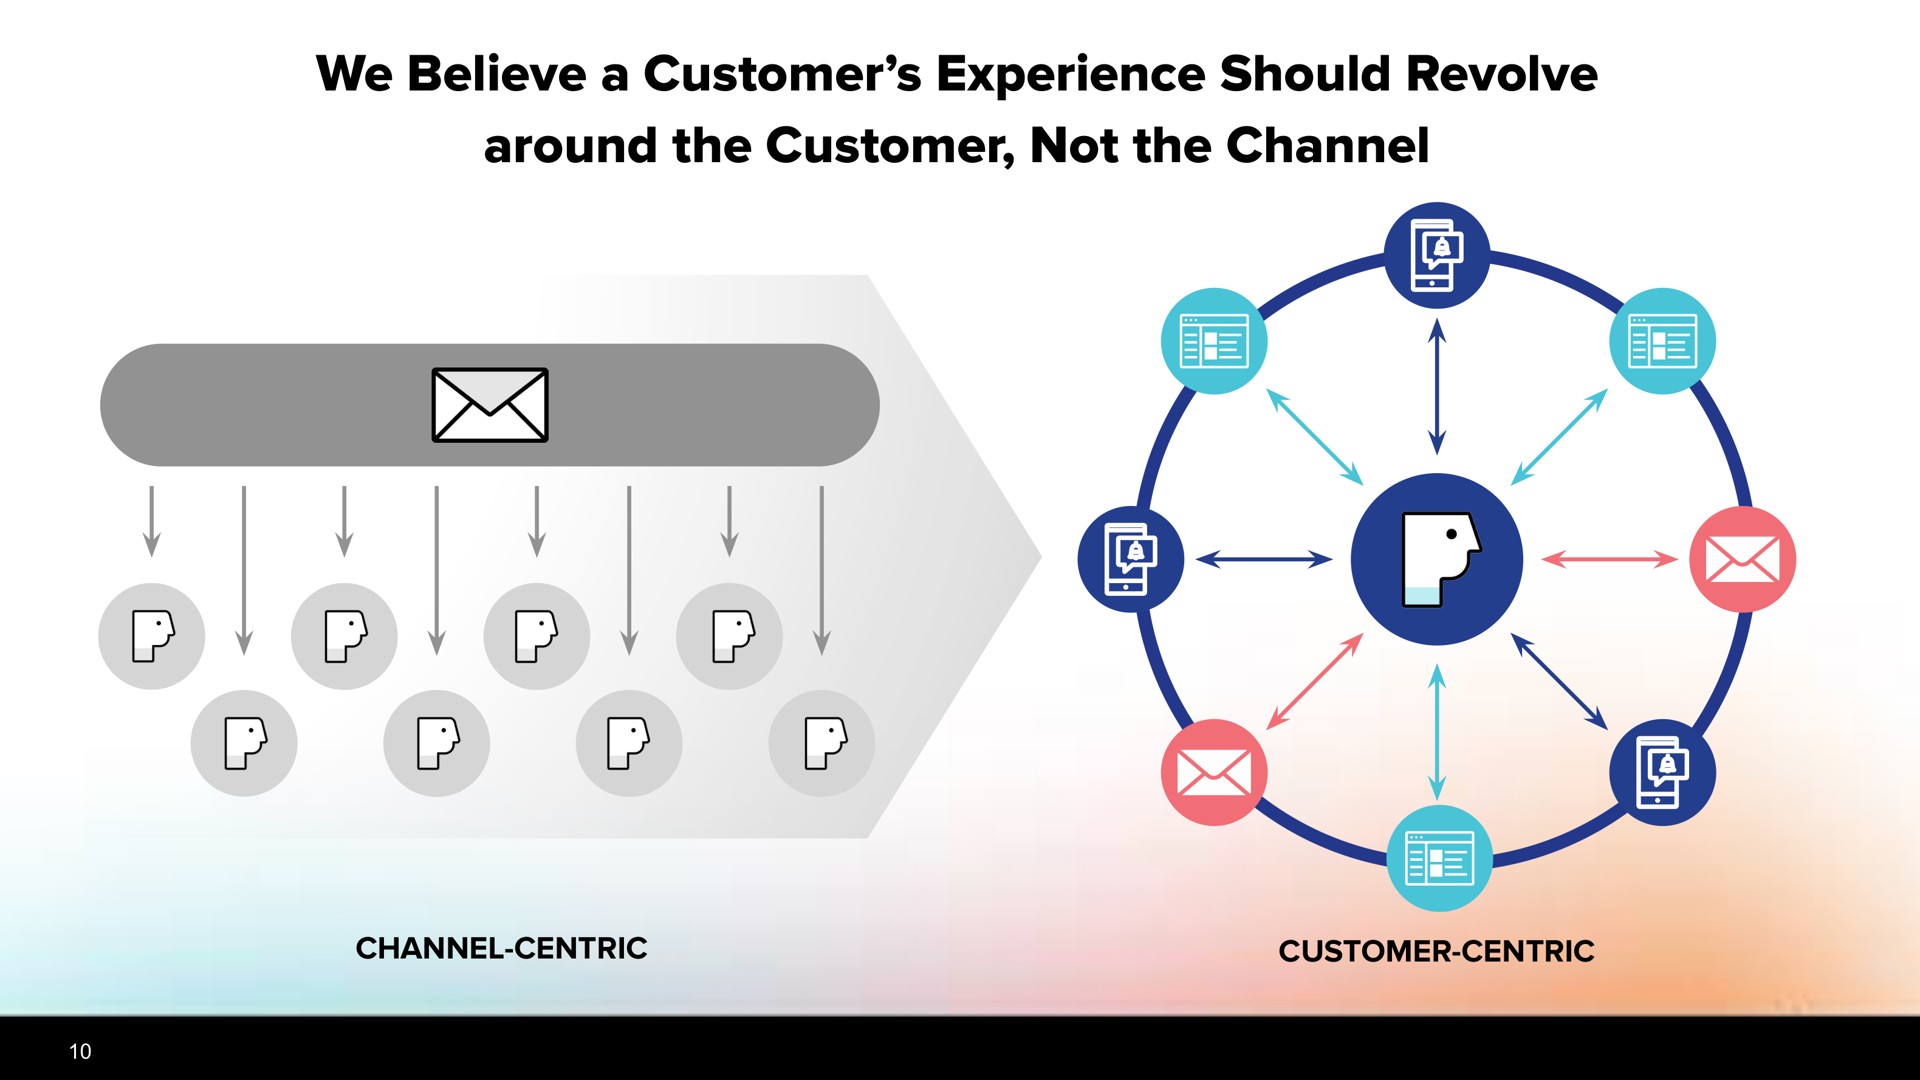 we believe a customer experience should revolve around the customer not the channel channel centric customer centric | Braze